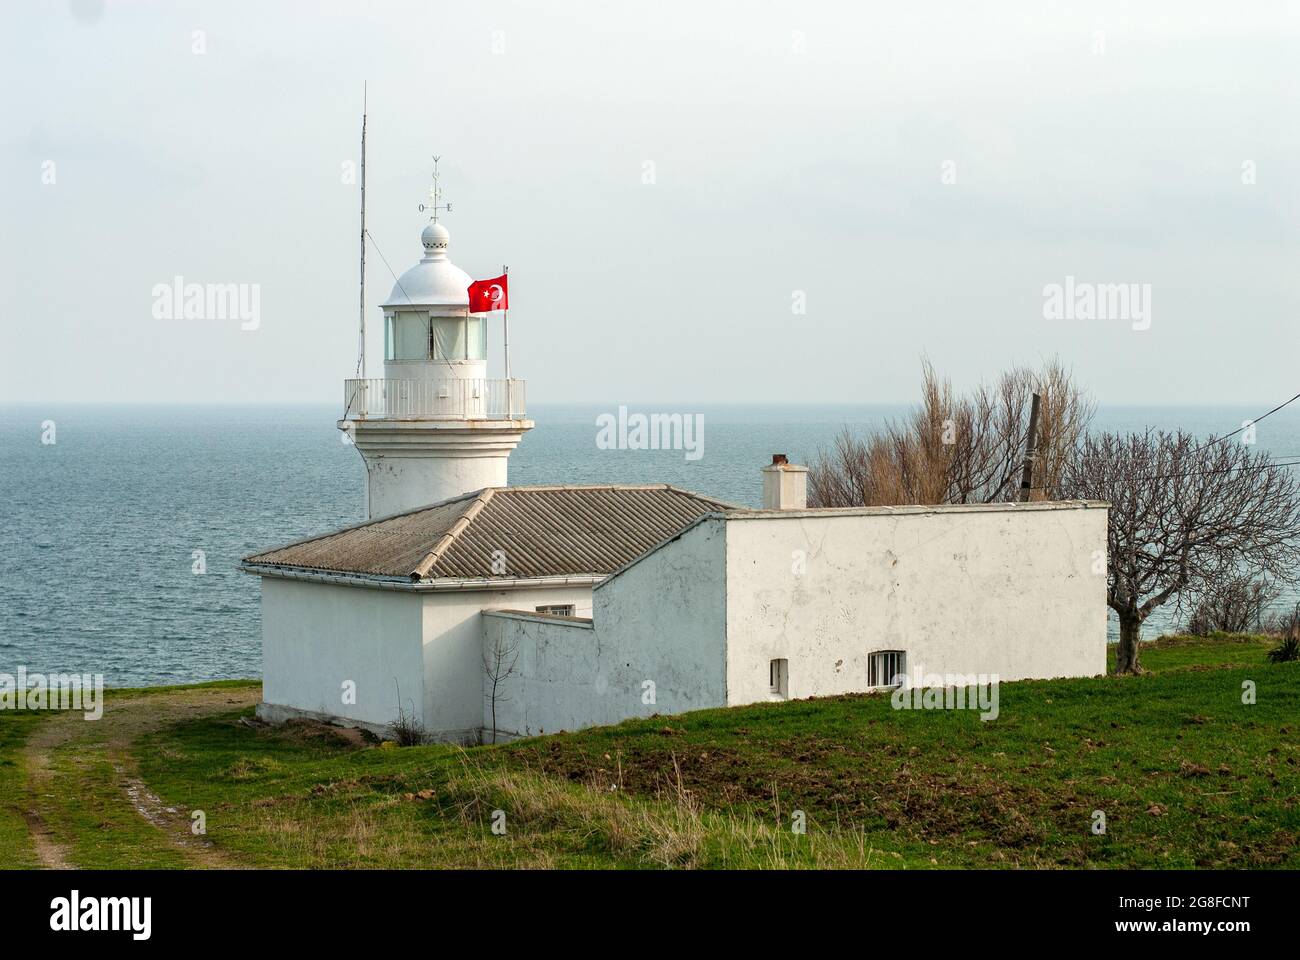 İgneada Limankoy Lighthouse (French Lighthouse), Demirkoy, Kirklareli, Turkey Stock Photo